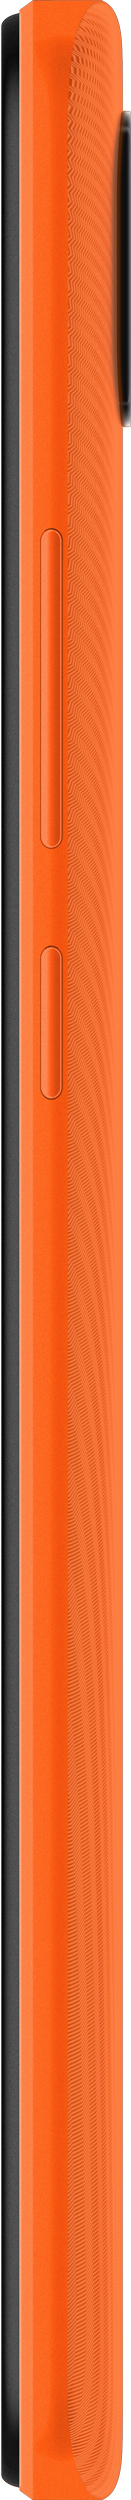 Цена Смартфон Xiaomi Redmi 9C 4/128Gb Sunrise Orange